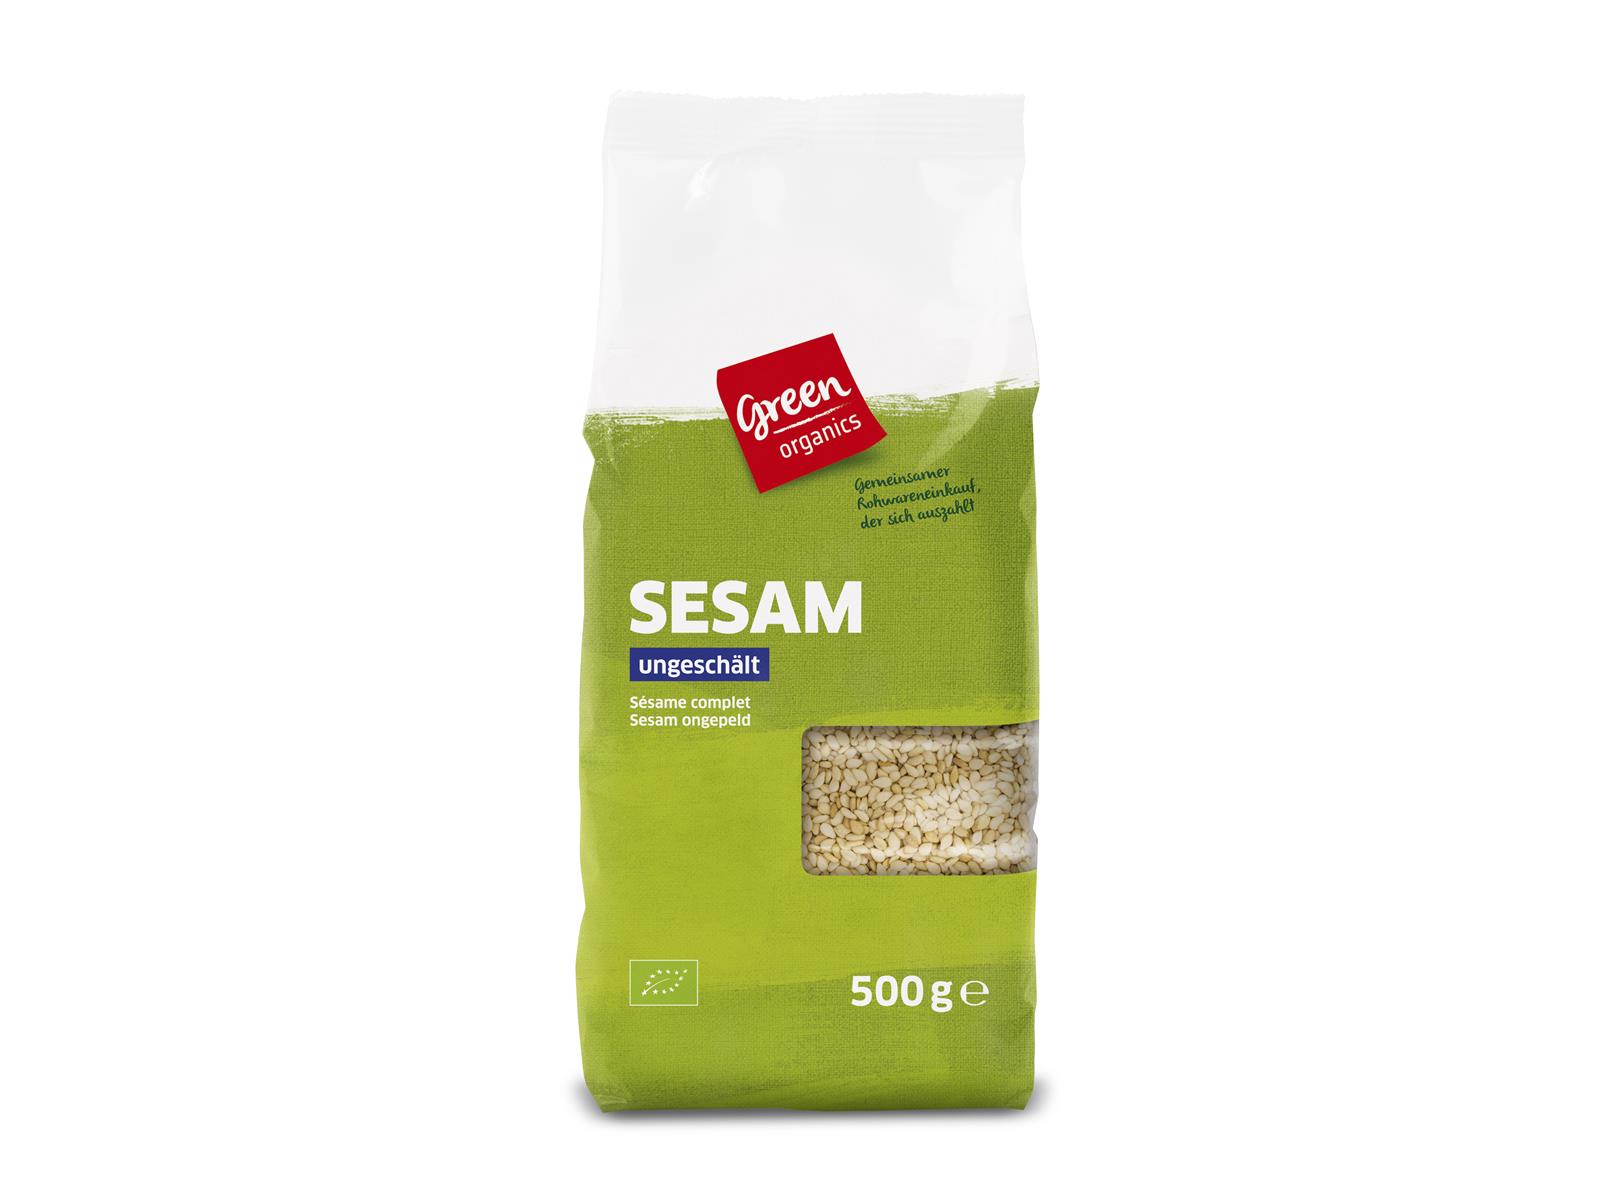 greenorganics Sesam ungeschält 500g